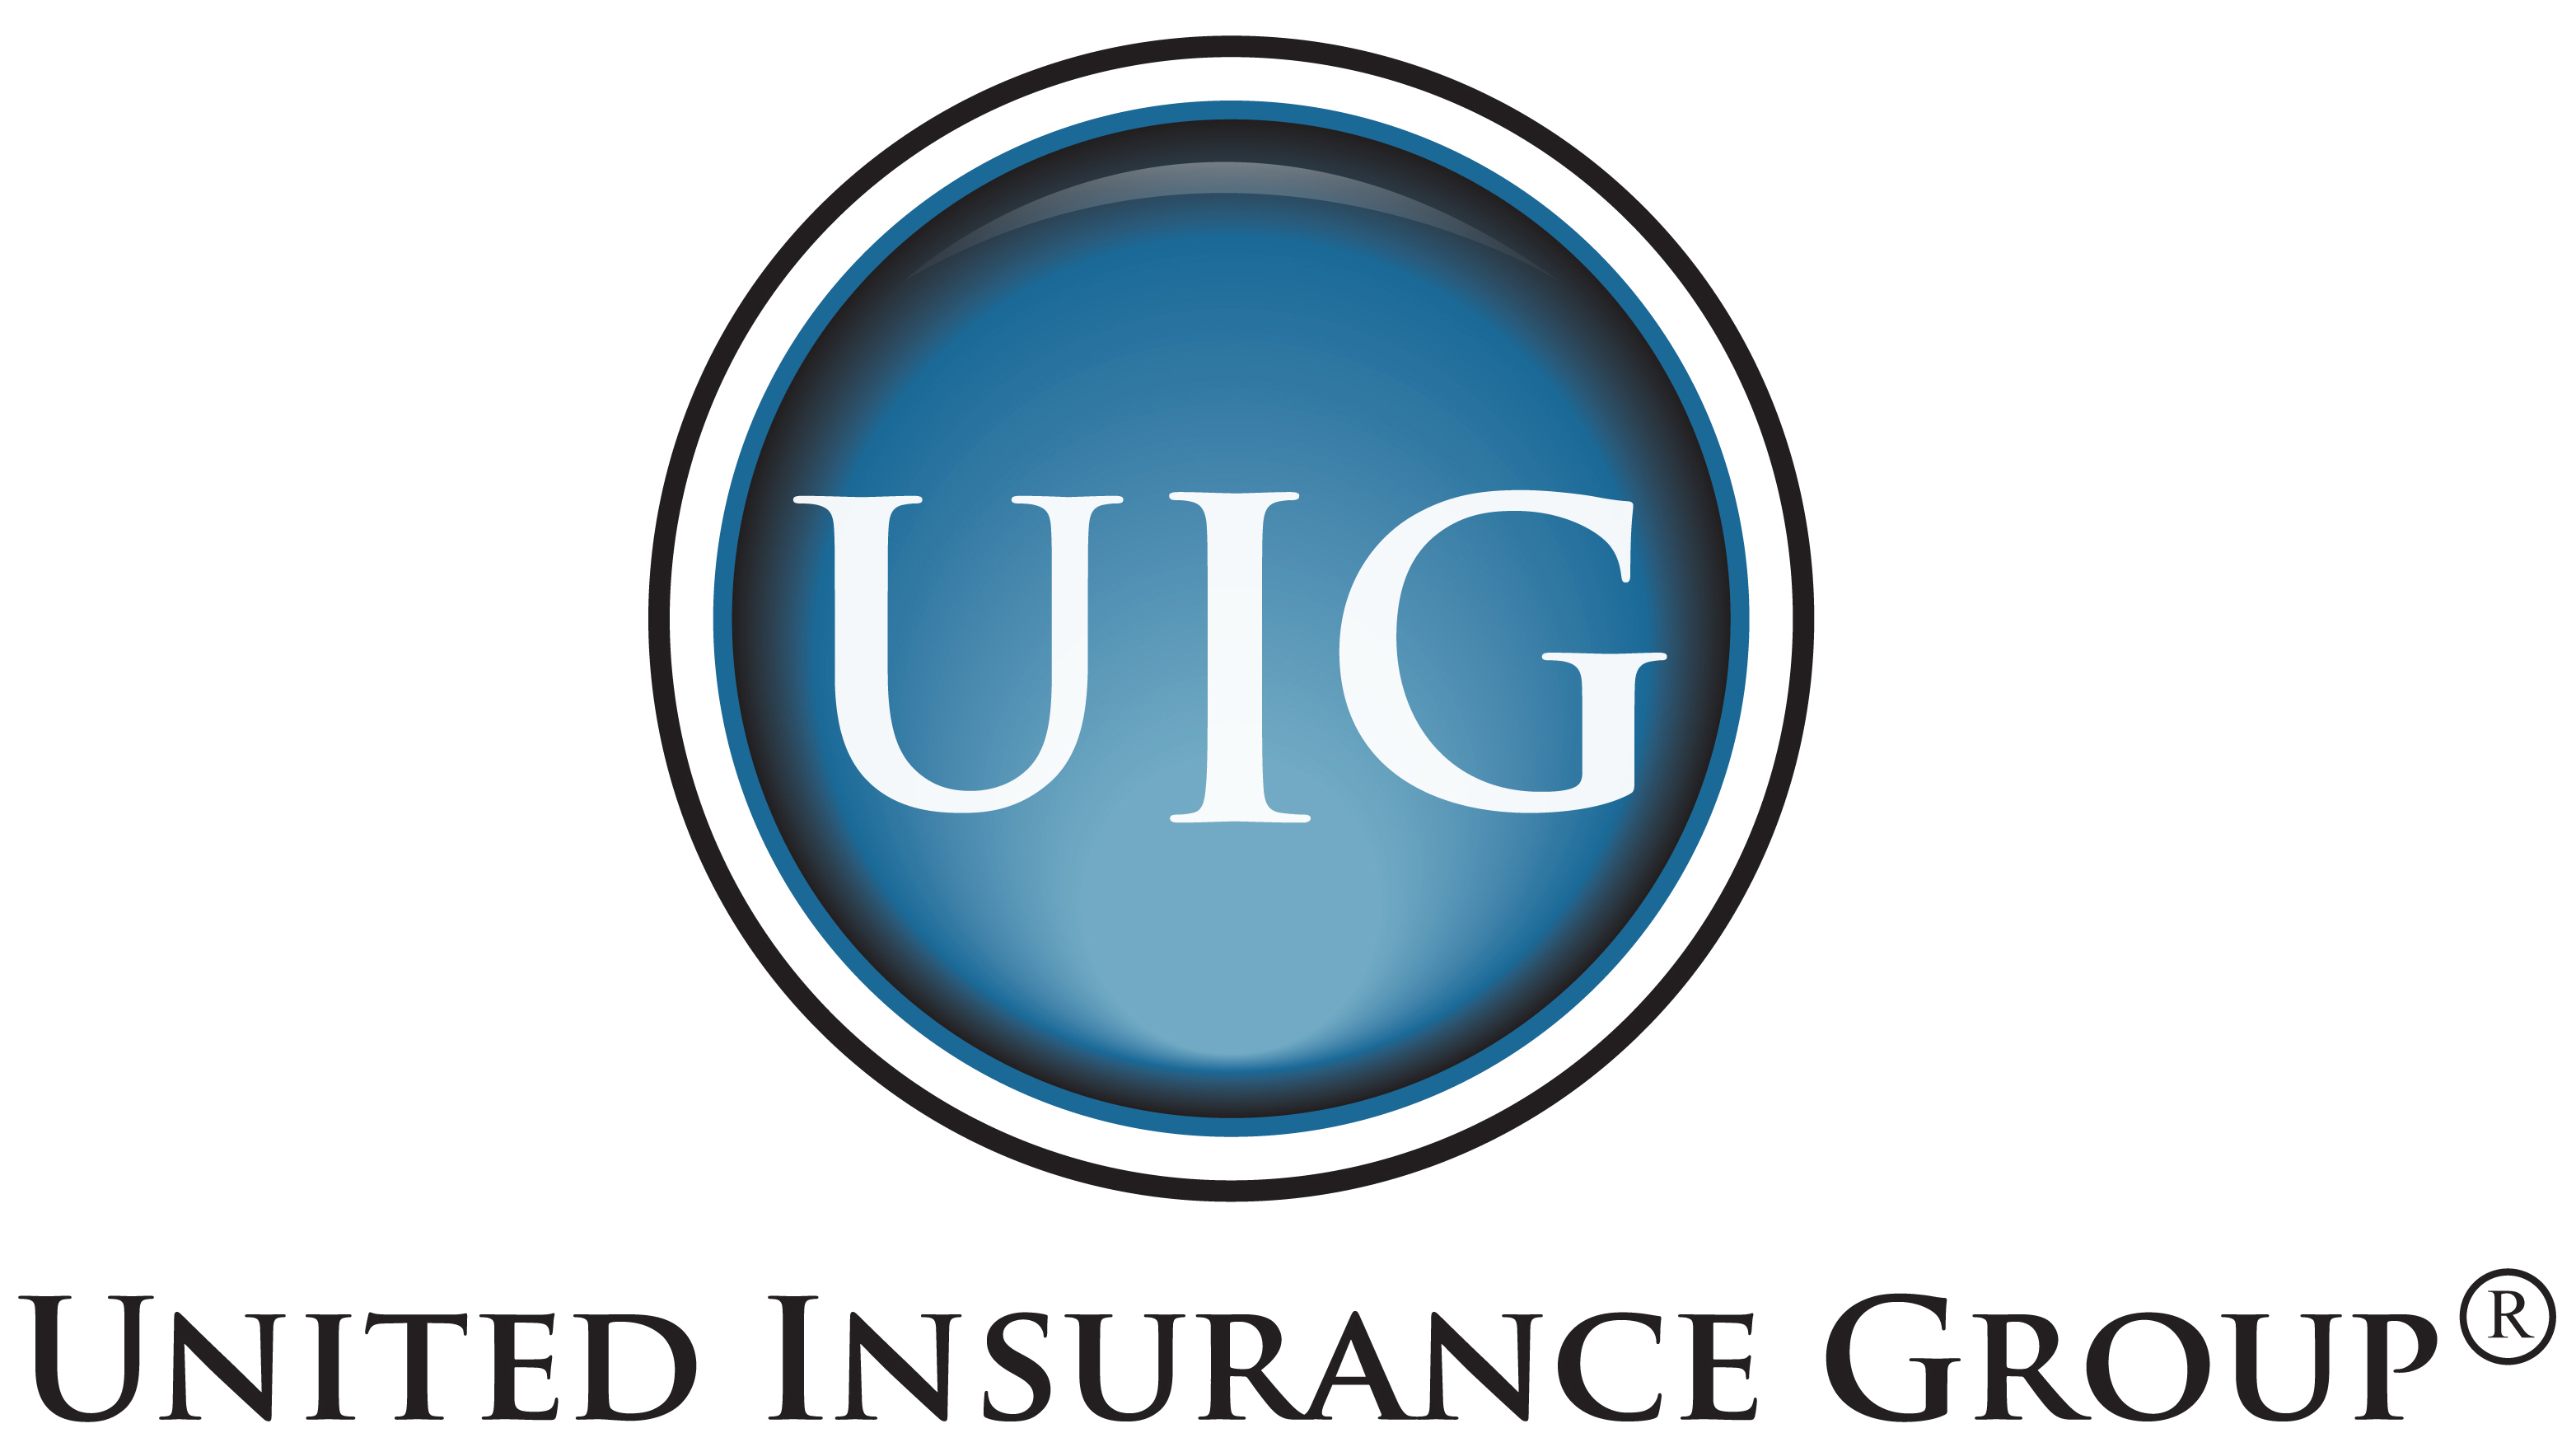 United Insurance Group